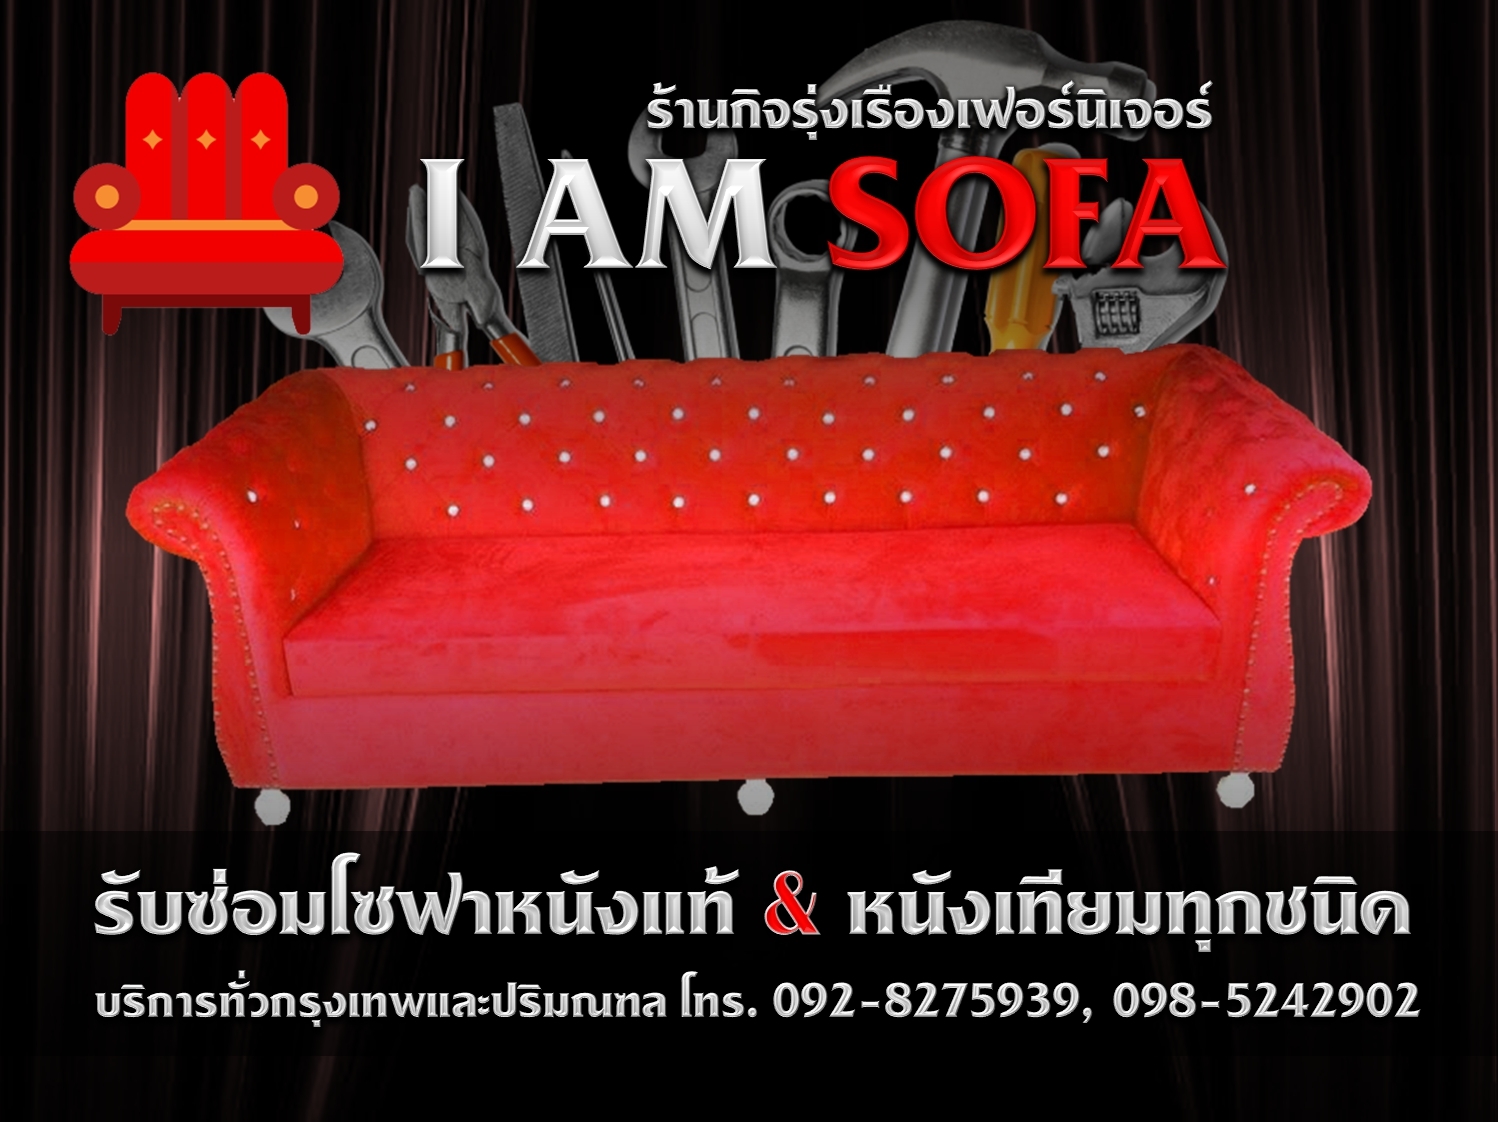 I Am Sofa